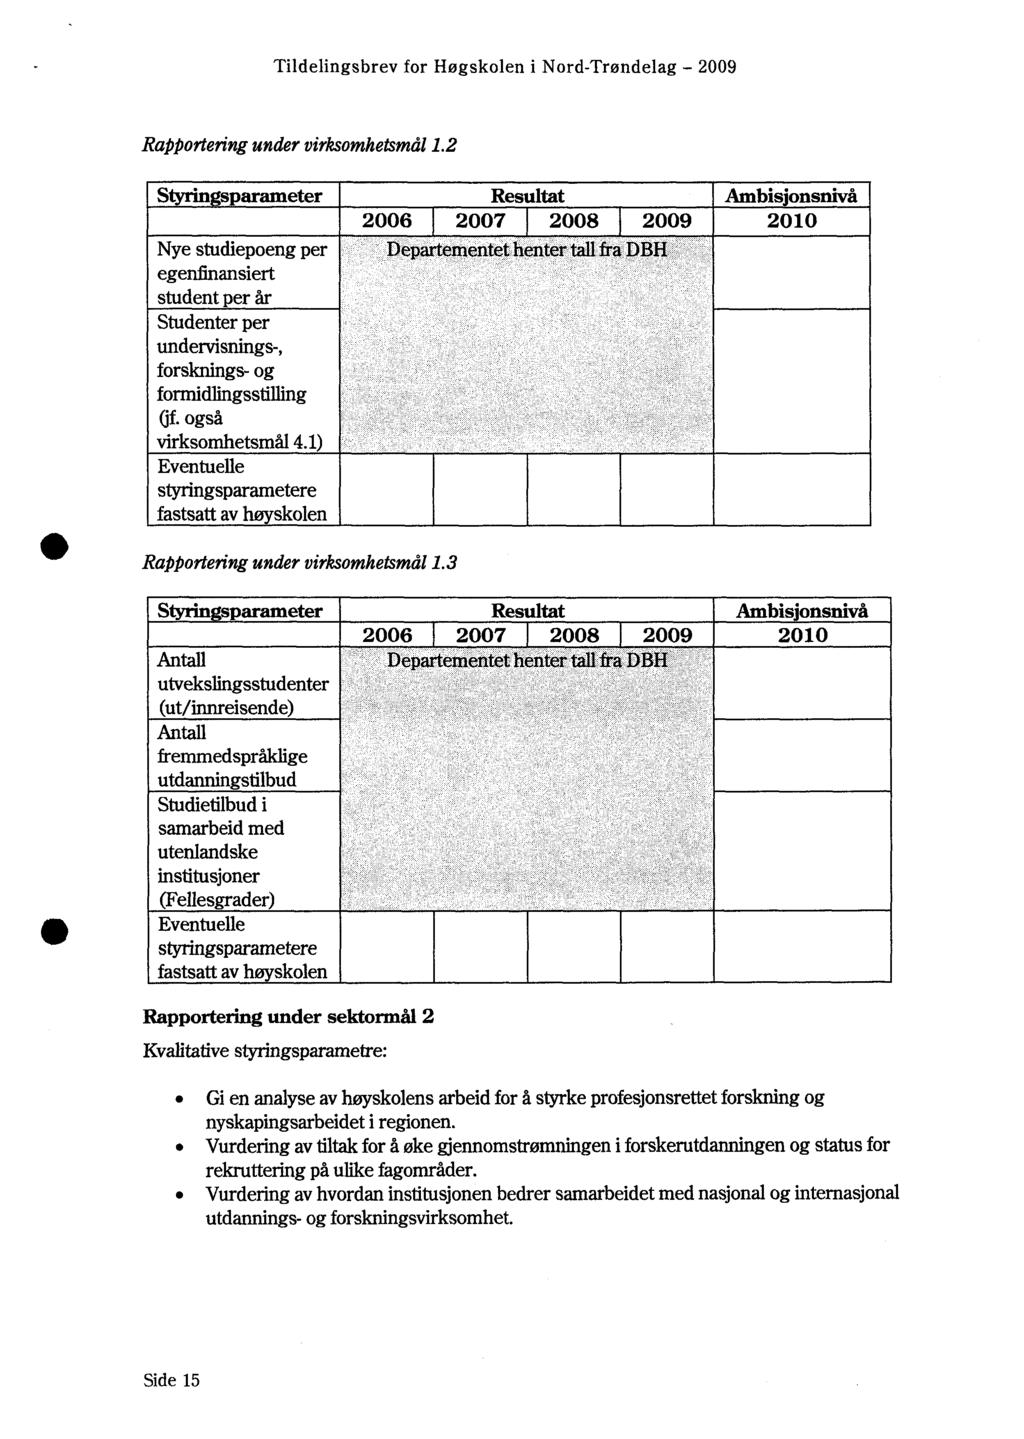 Tildelingsbrev for Høgskolen i Nord-Trøndelag 2009 Rapportering under virksomhetsmål 1.